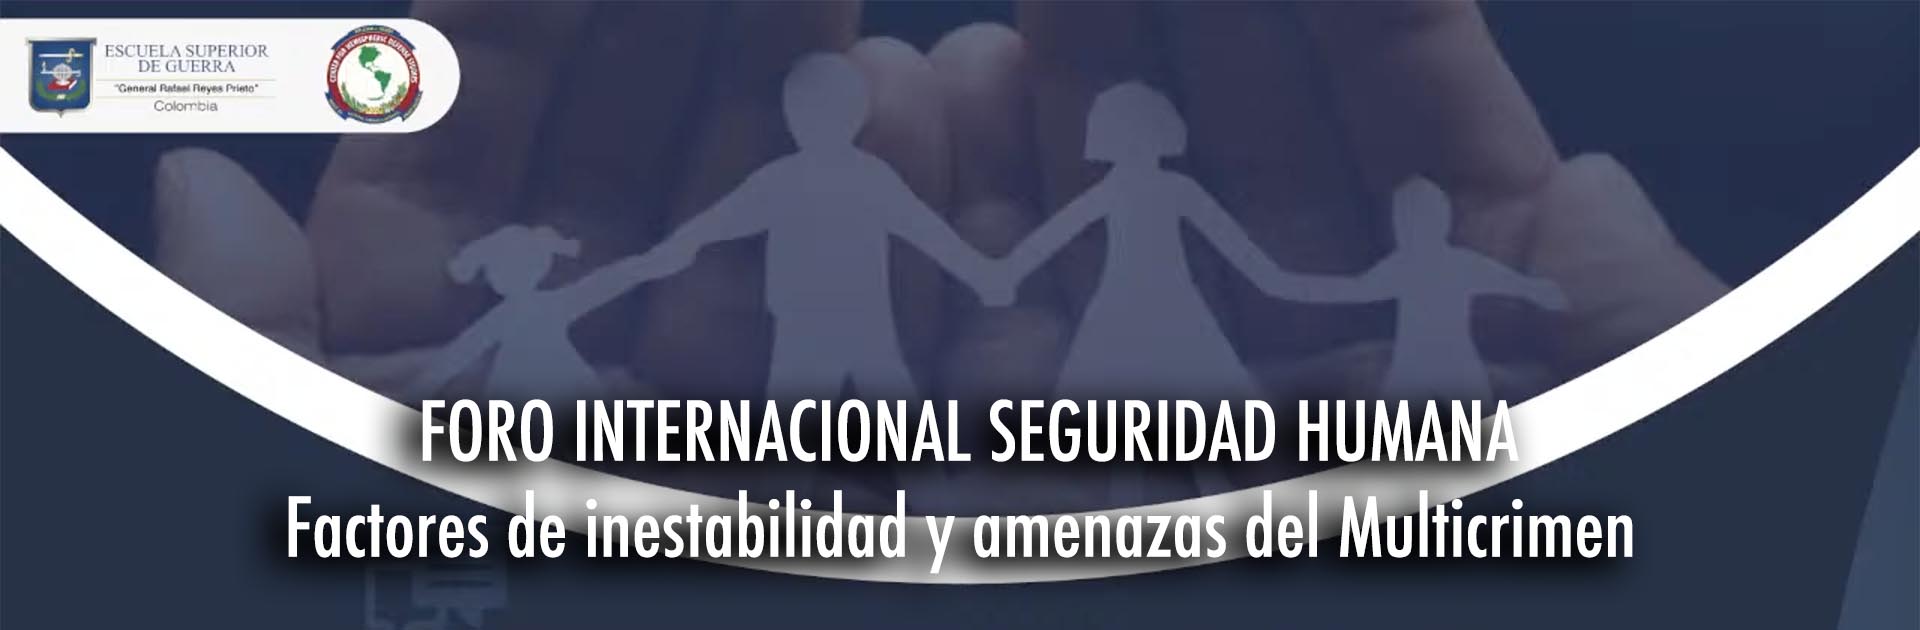 International Forum on Human Security